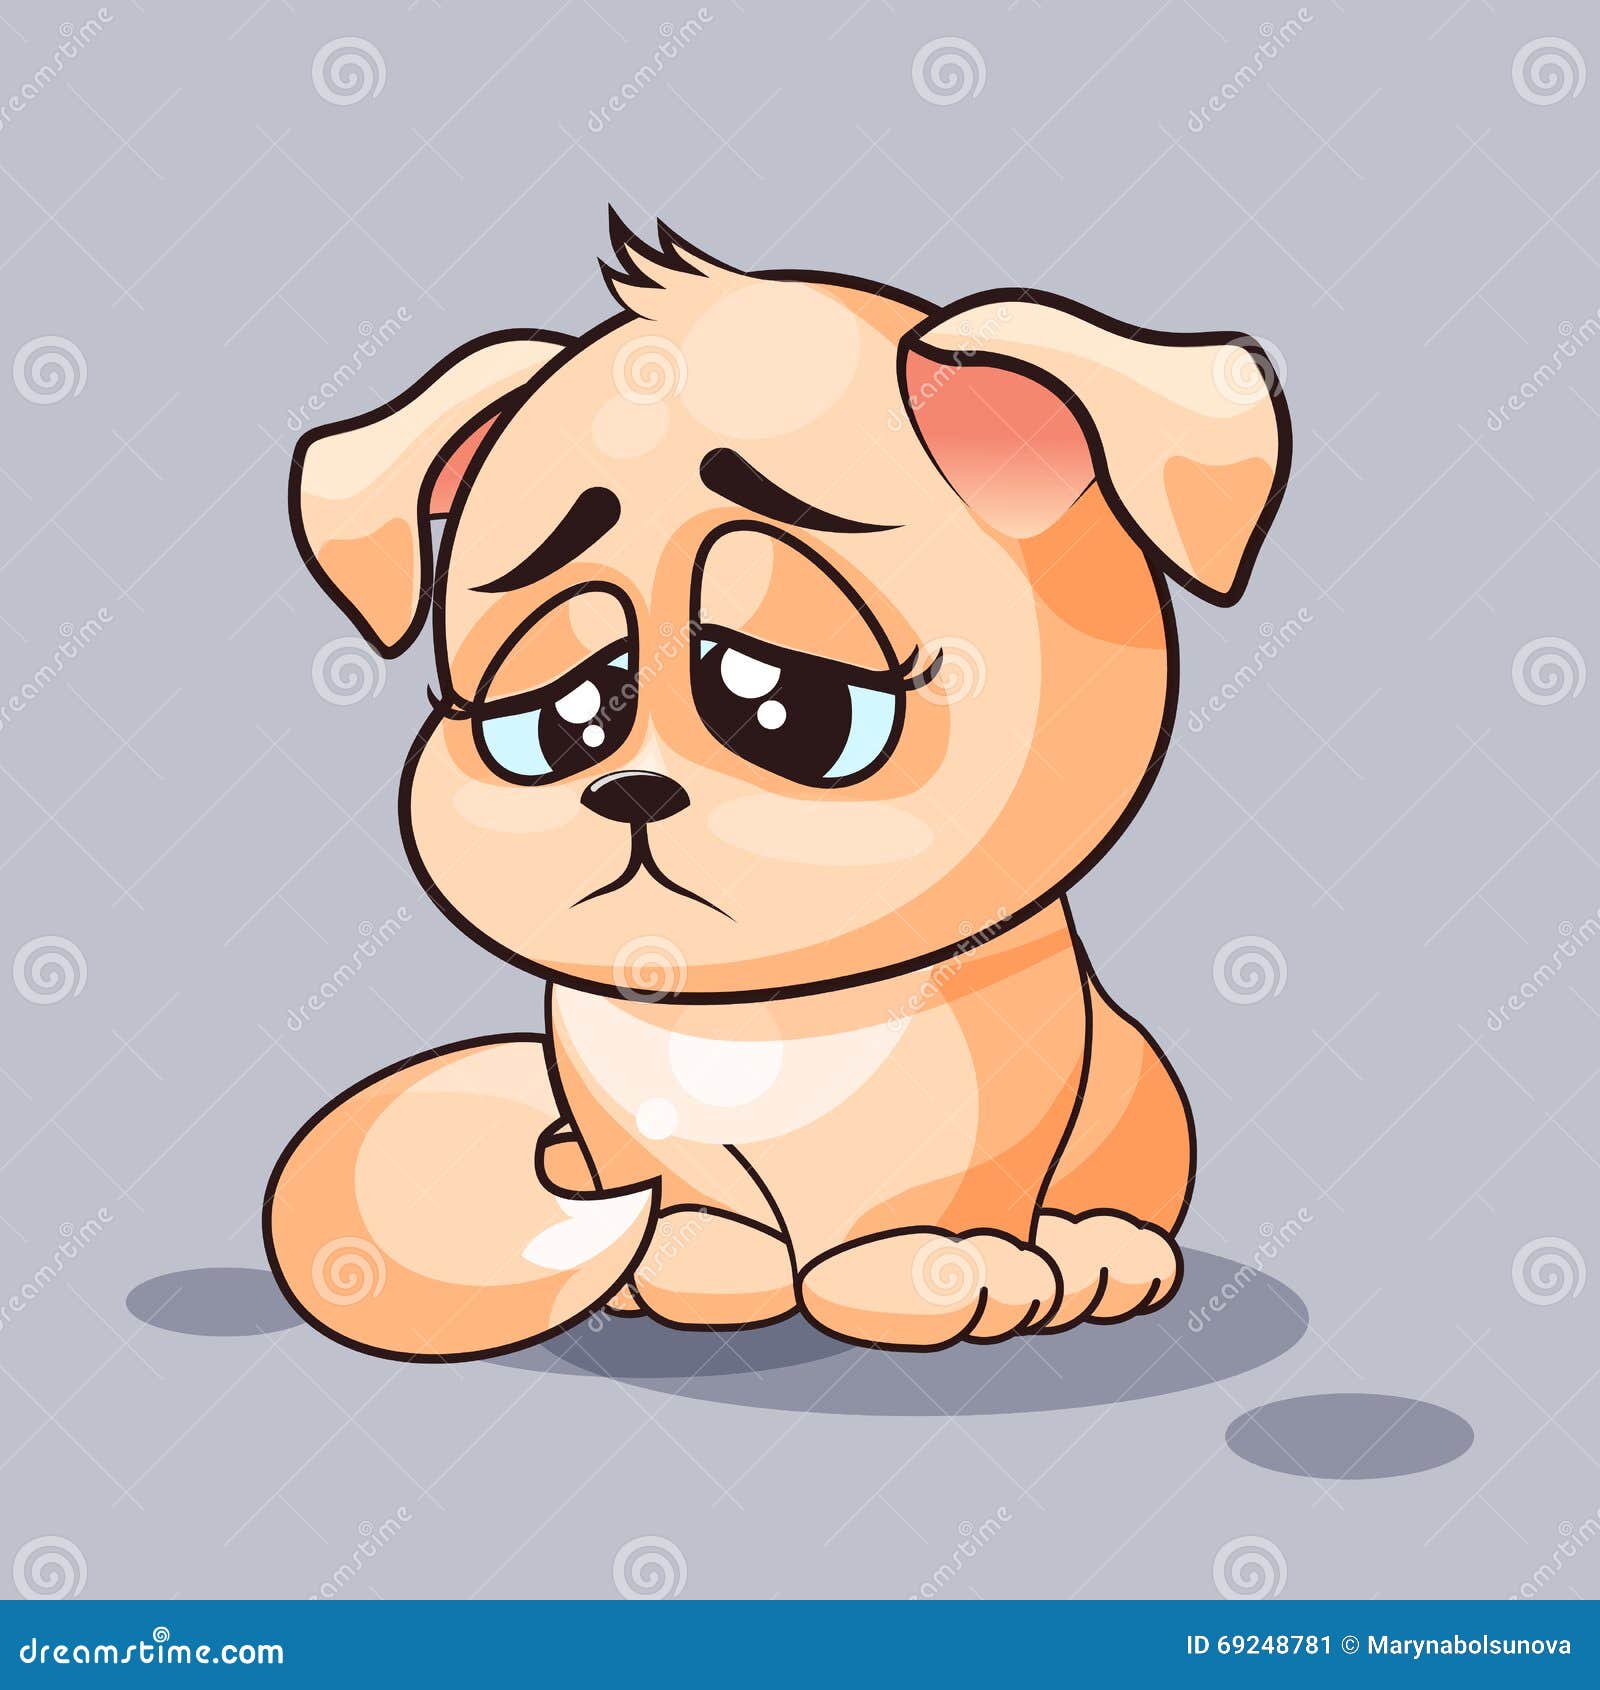 Dog is sad stock vector. Illustration of blue, emoticons - 69248781